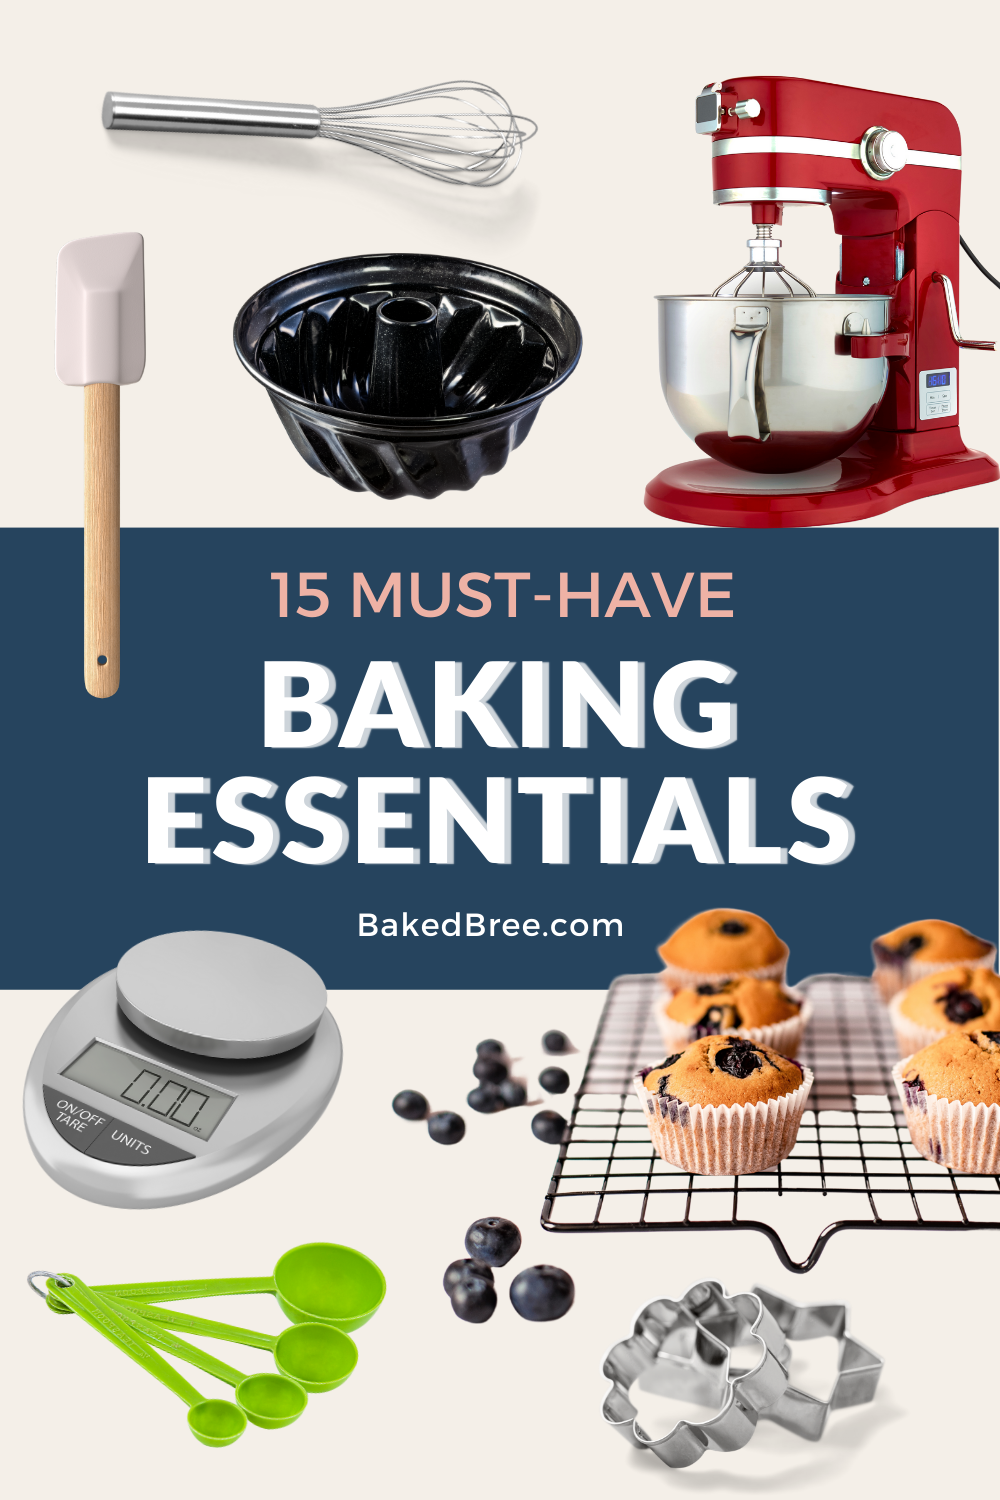 baking essentials, baking, baking must haves, baking